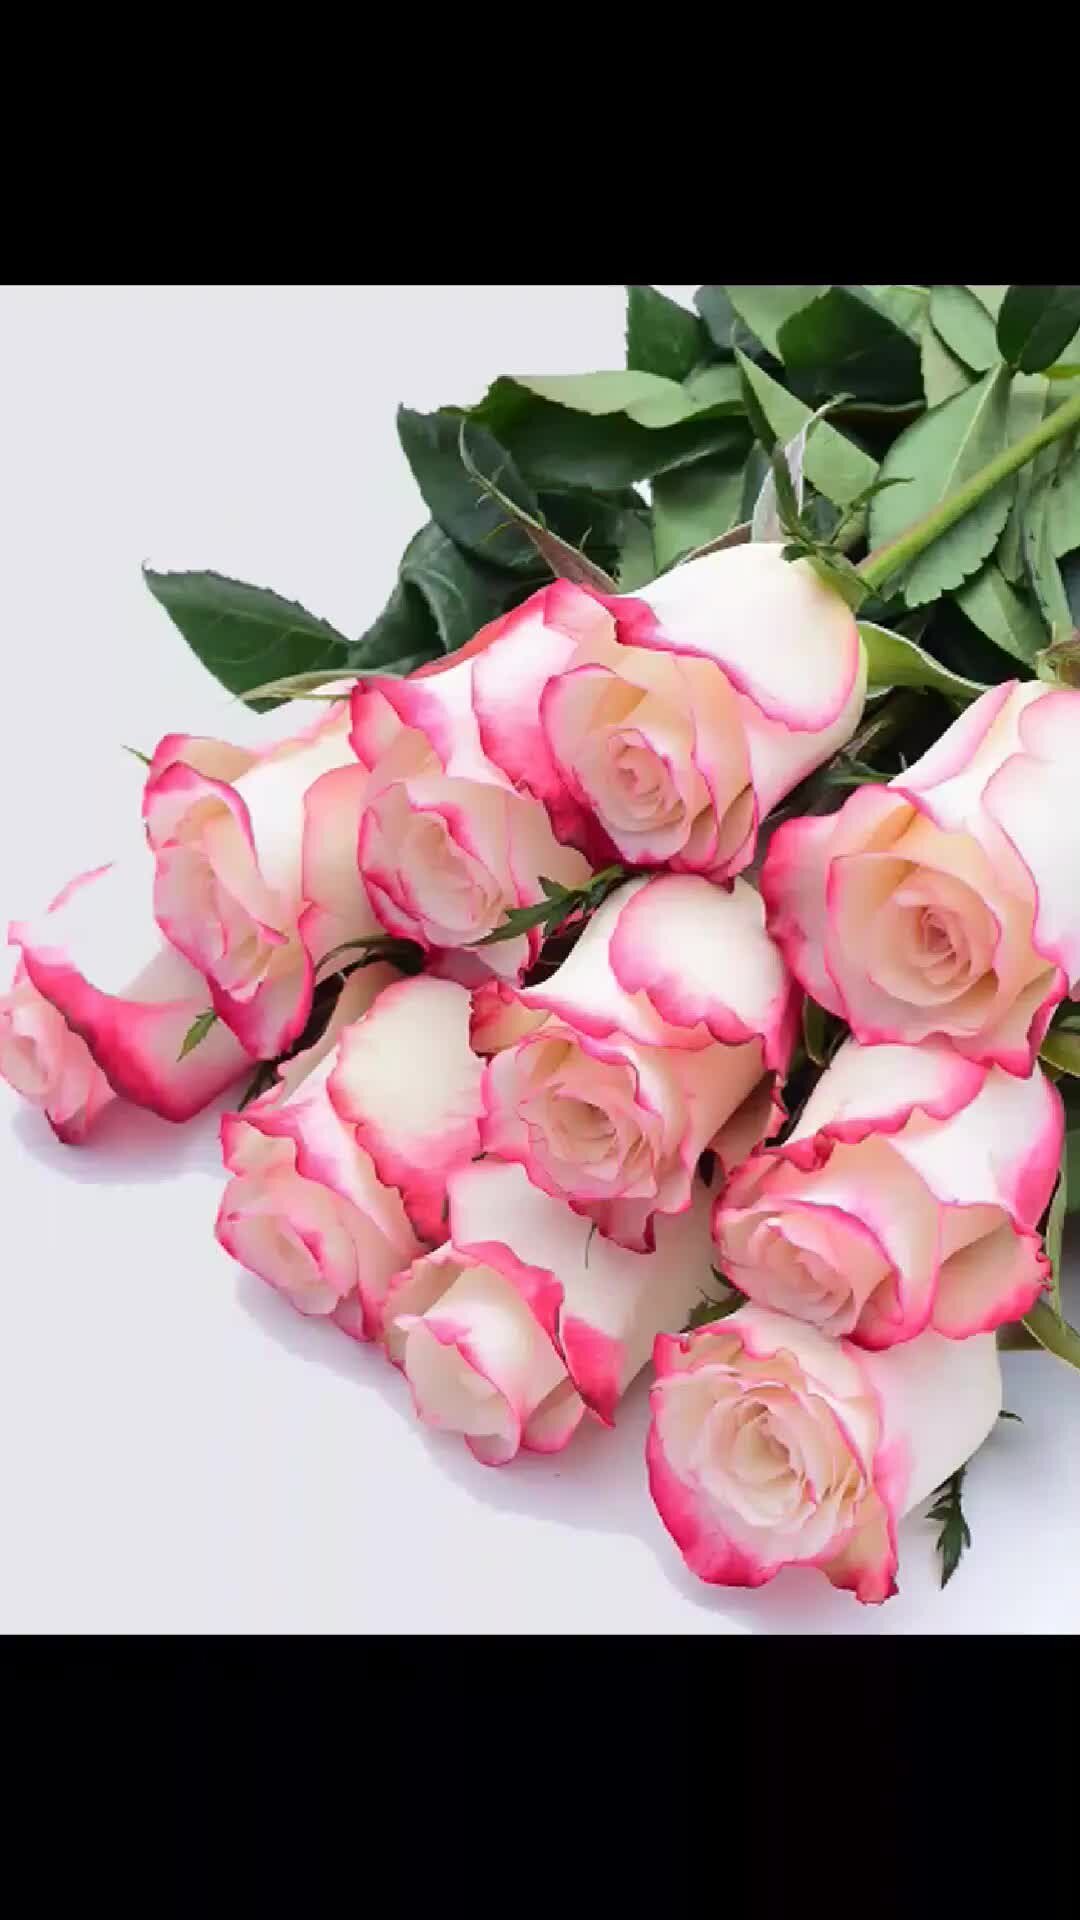 Букет свежих роз. Бело розовые розы. Розовый букет. Букет розовых роз.